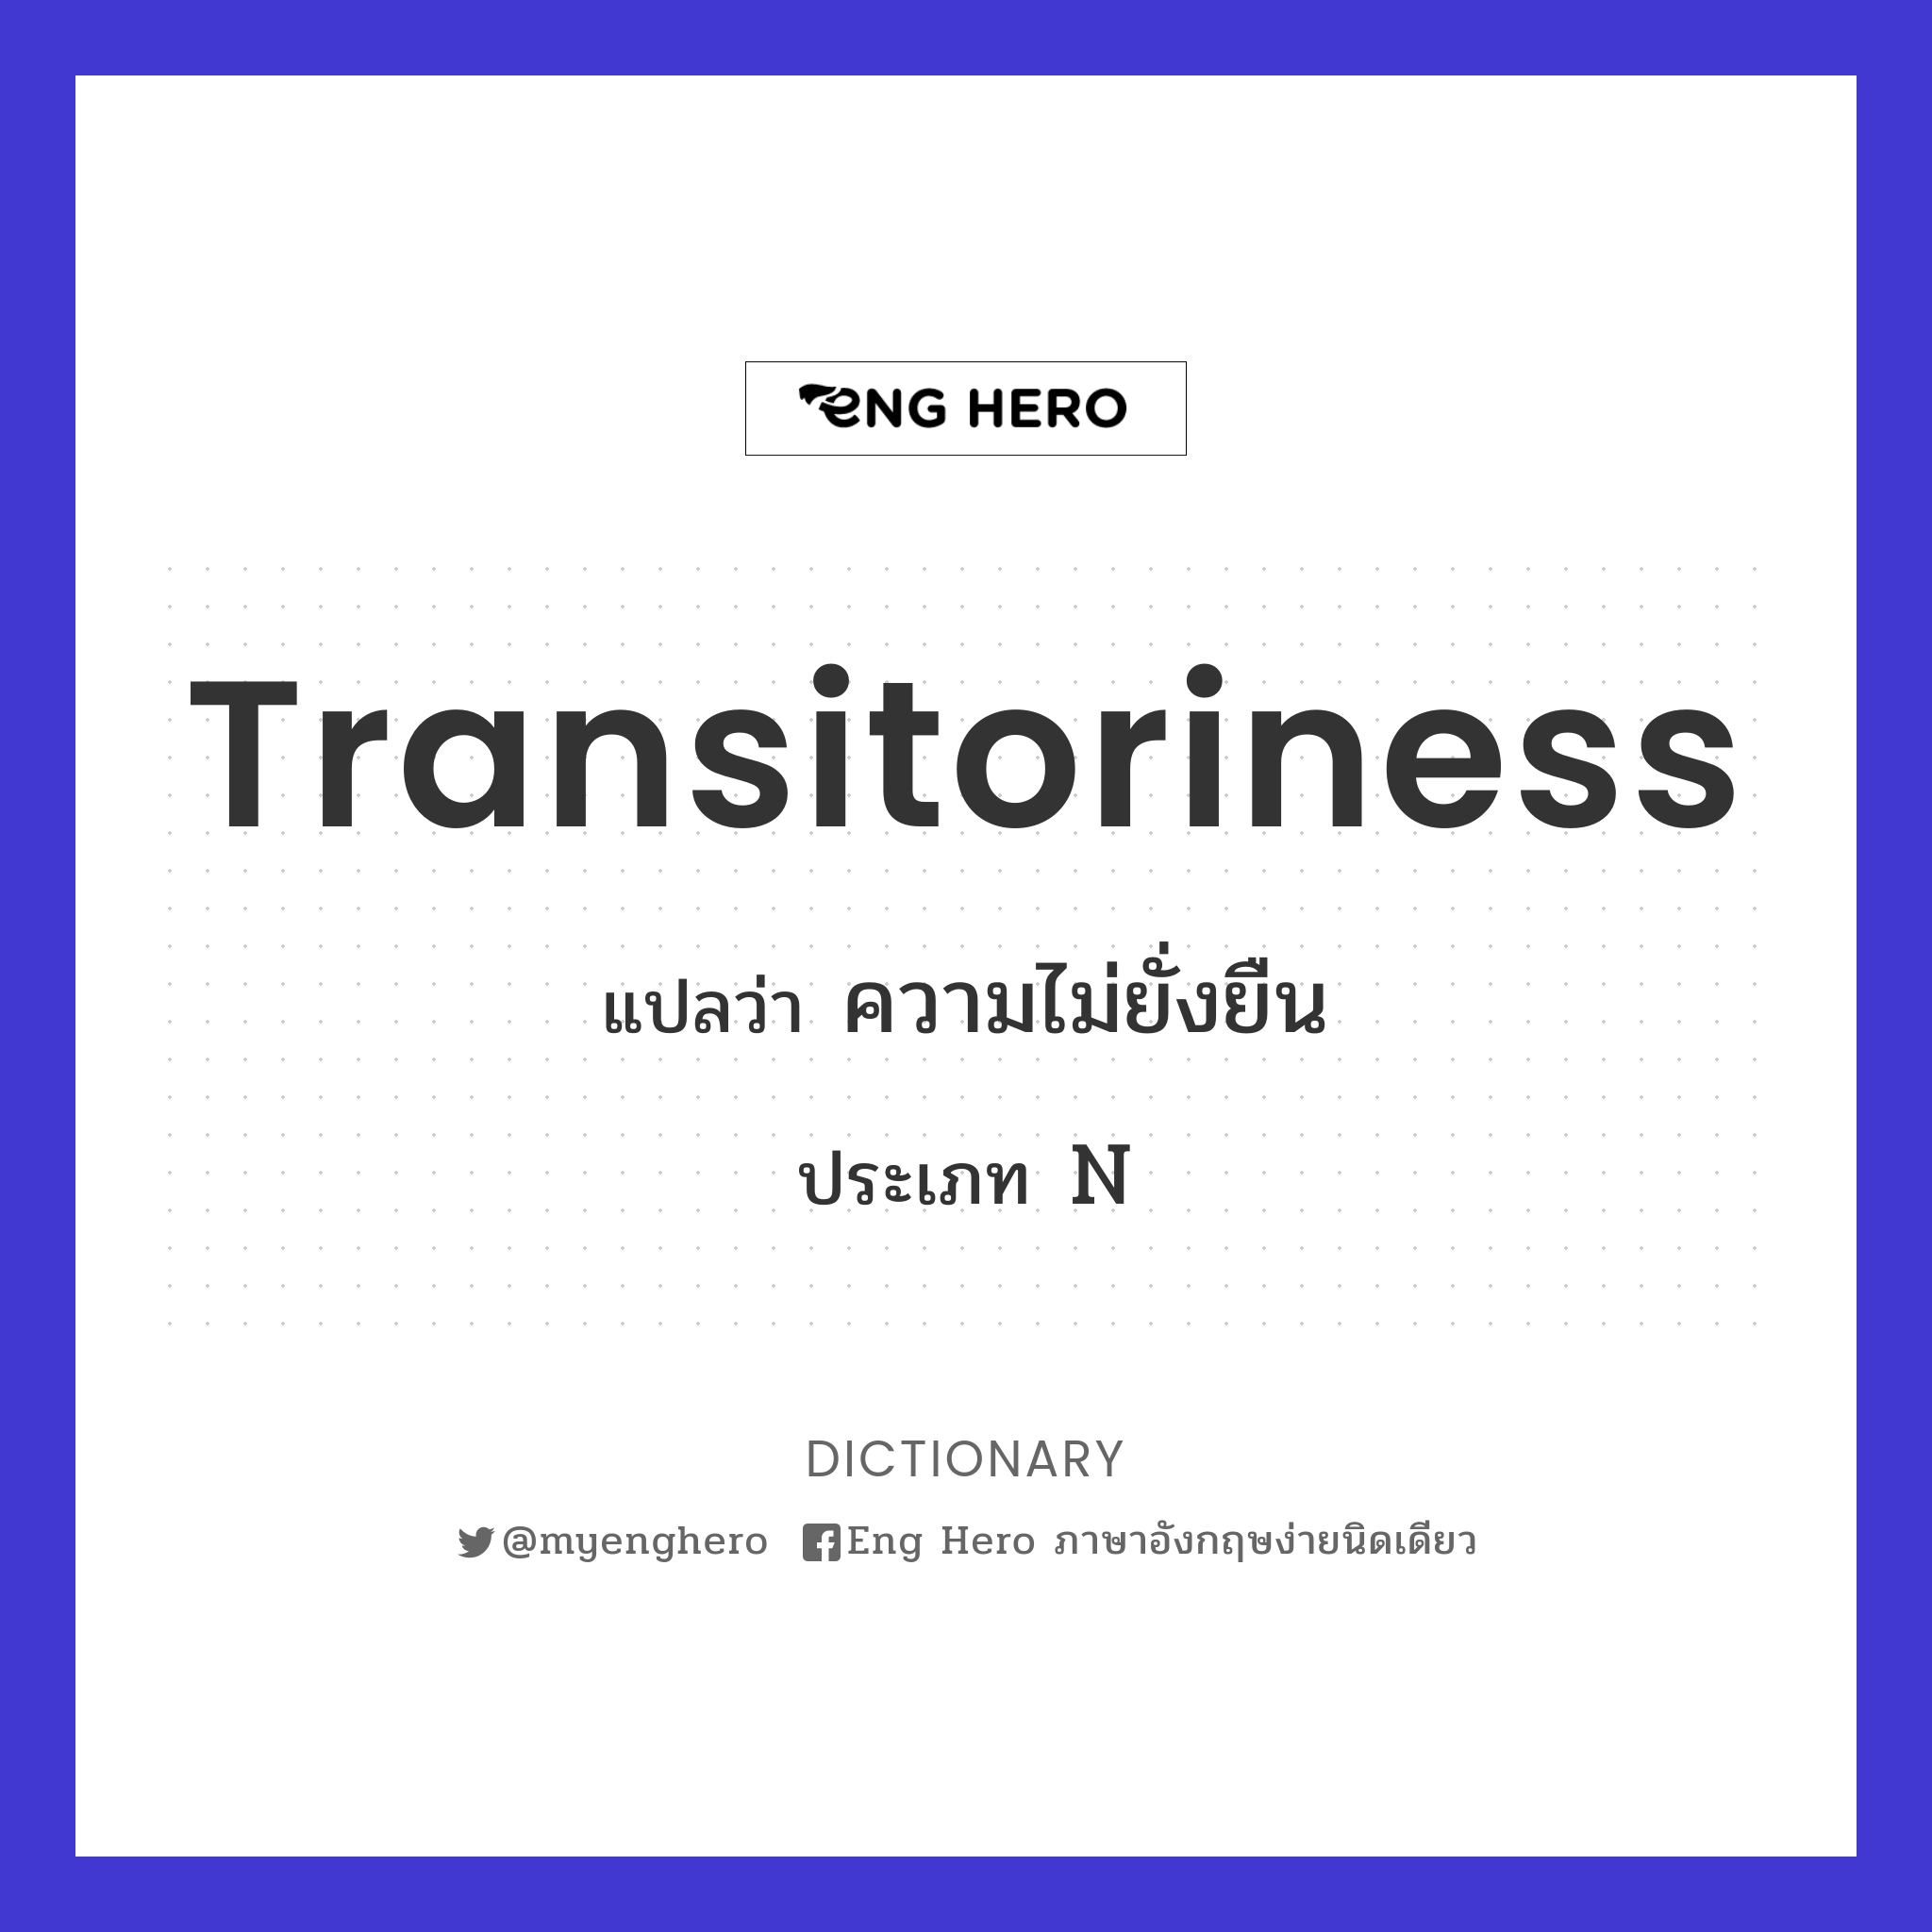 transitoriness